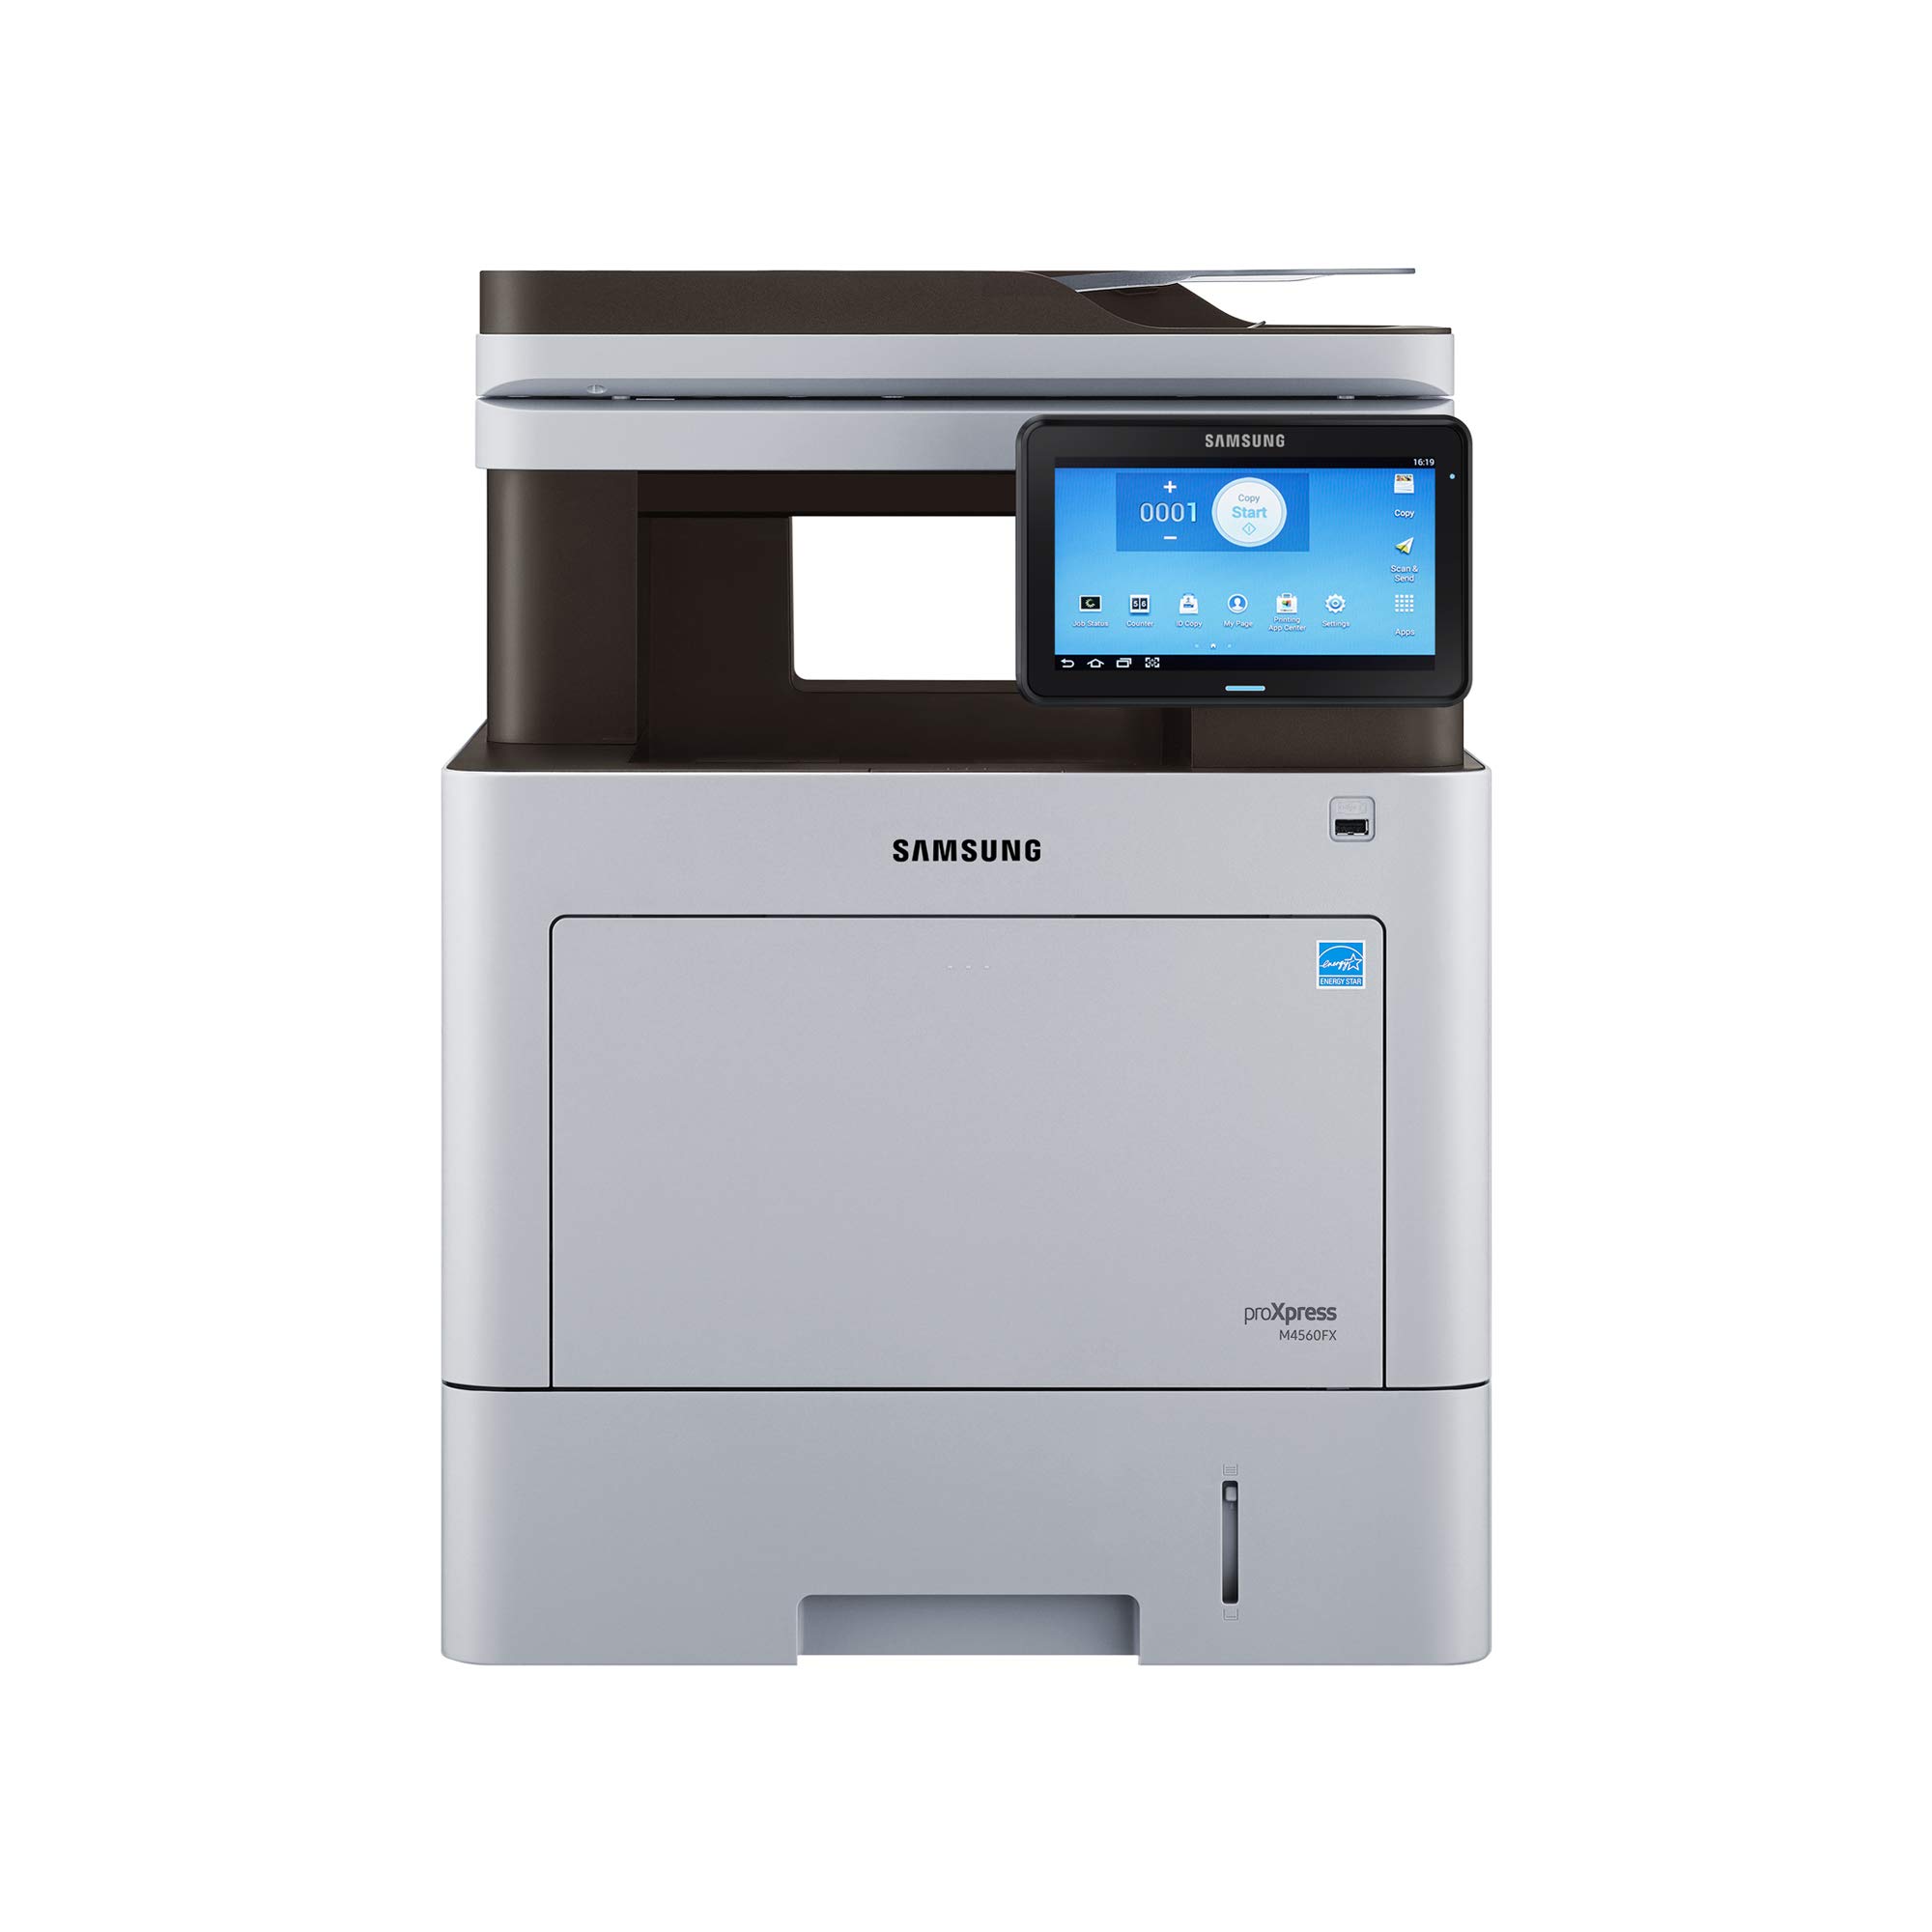 Samsung ProXpress SL-M3870 Laser Multifunction Printer series